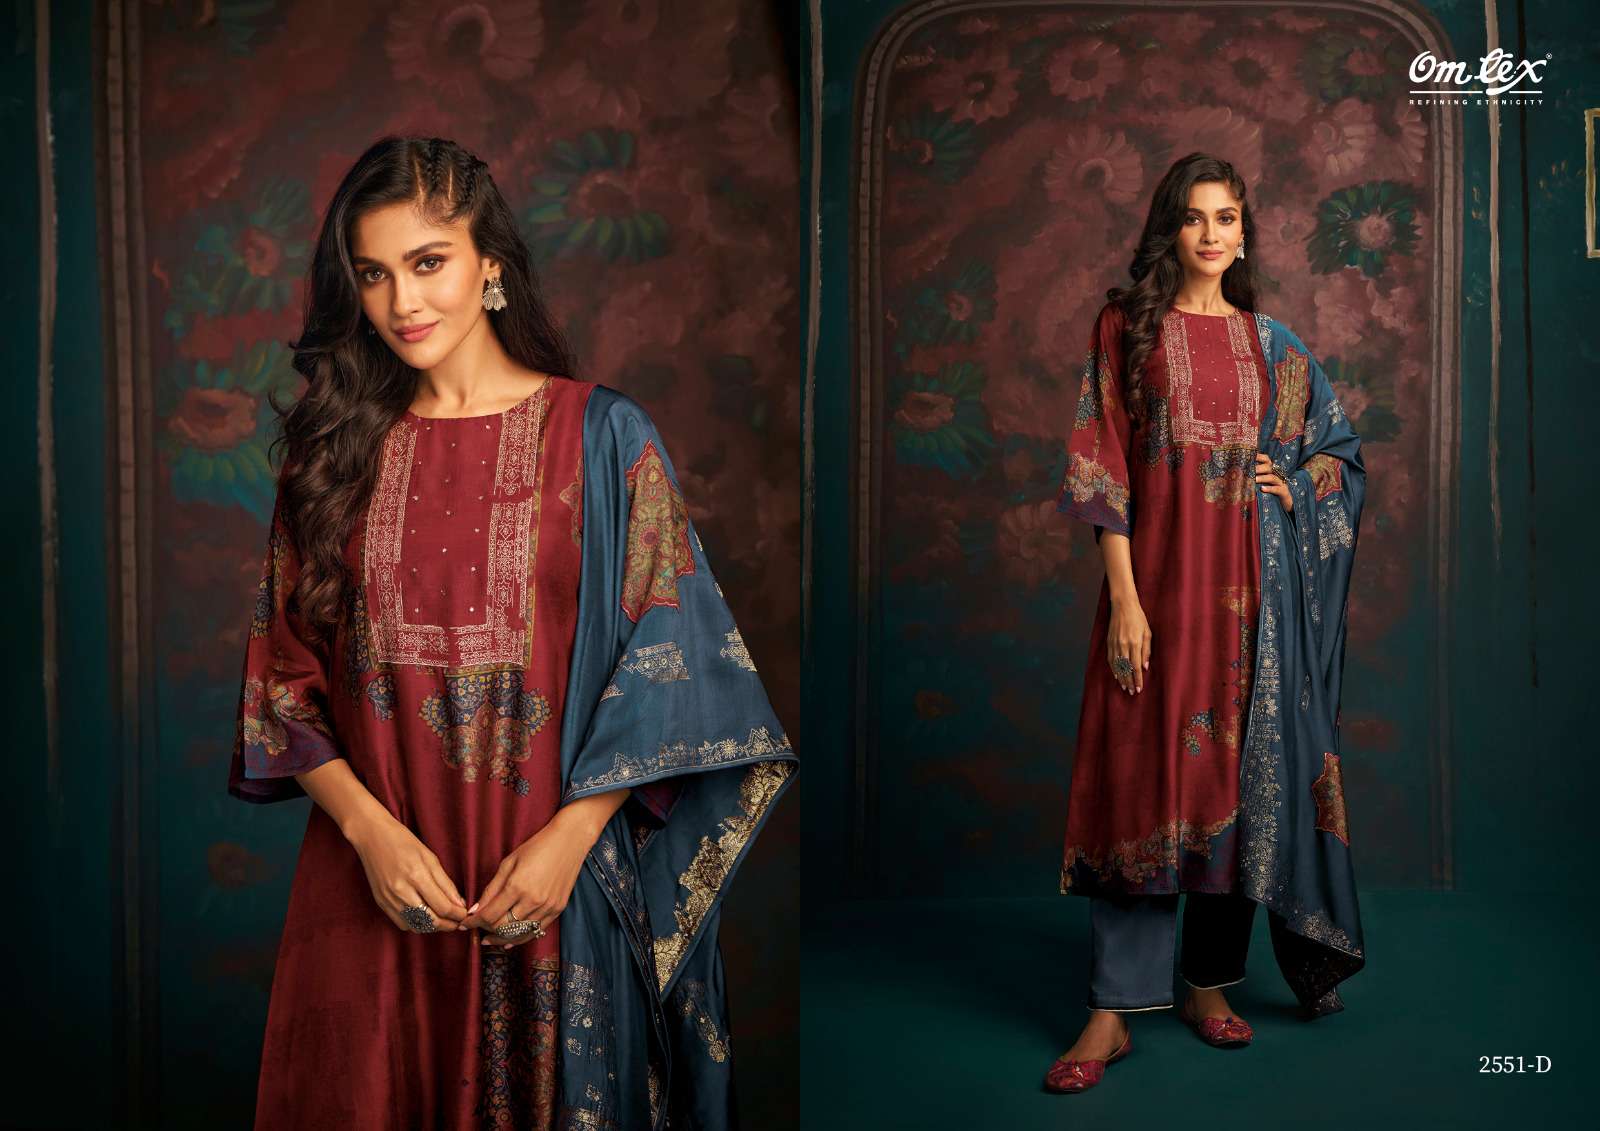 om tex zinnia 2551 colour series latest designer wedding wear muslin salwar kameez wholesale price surat